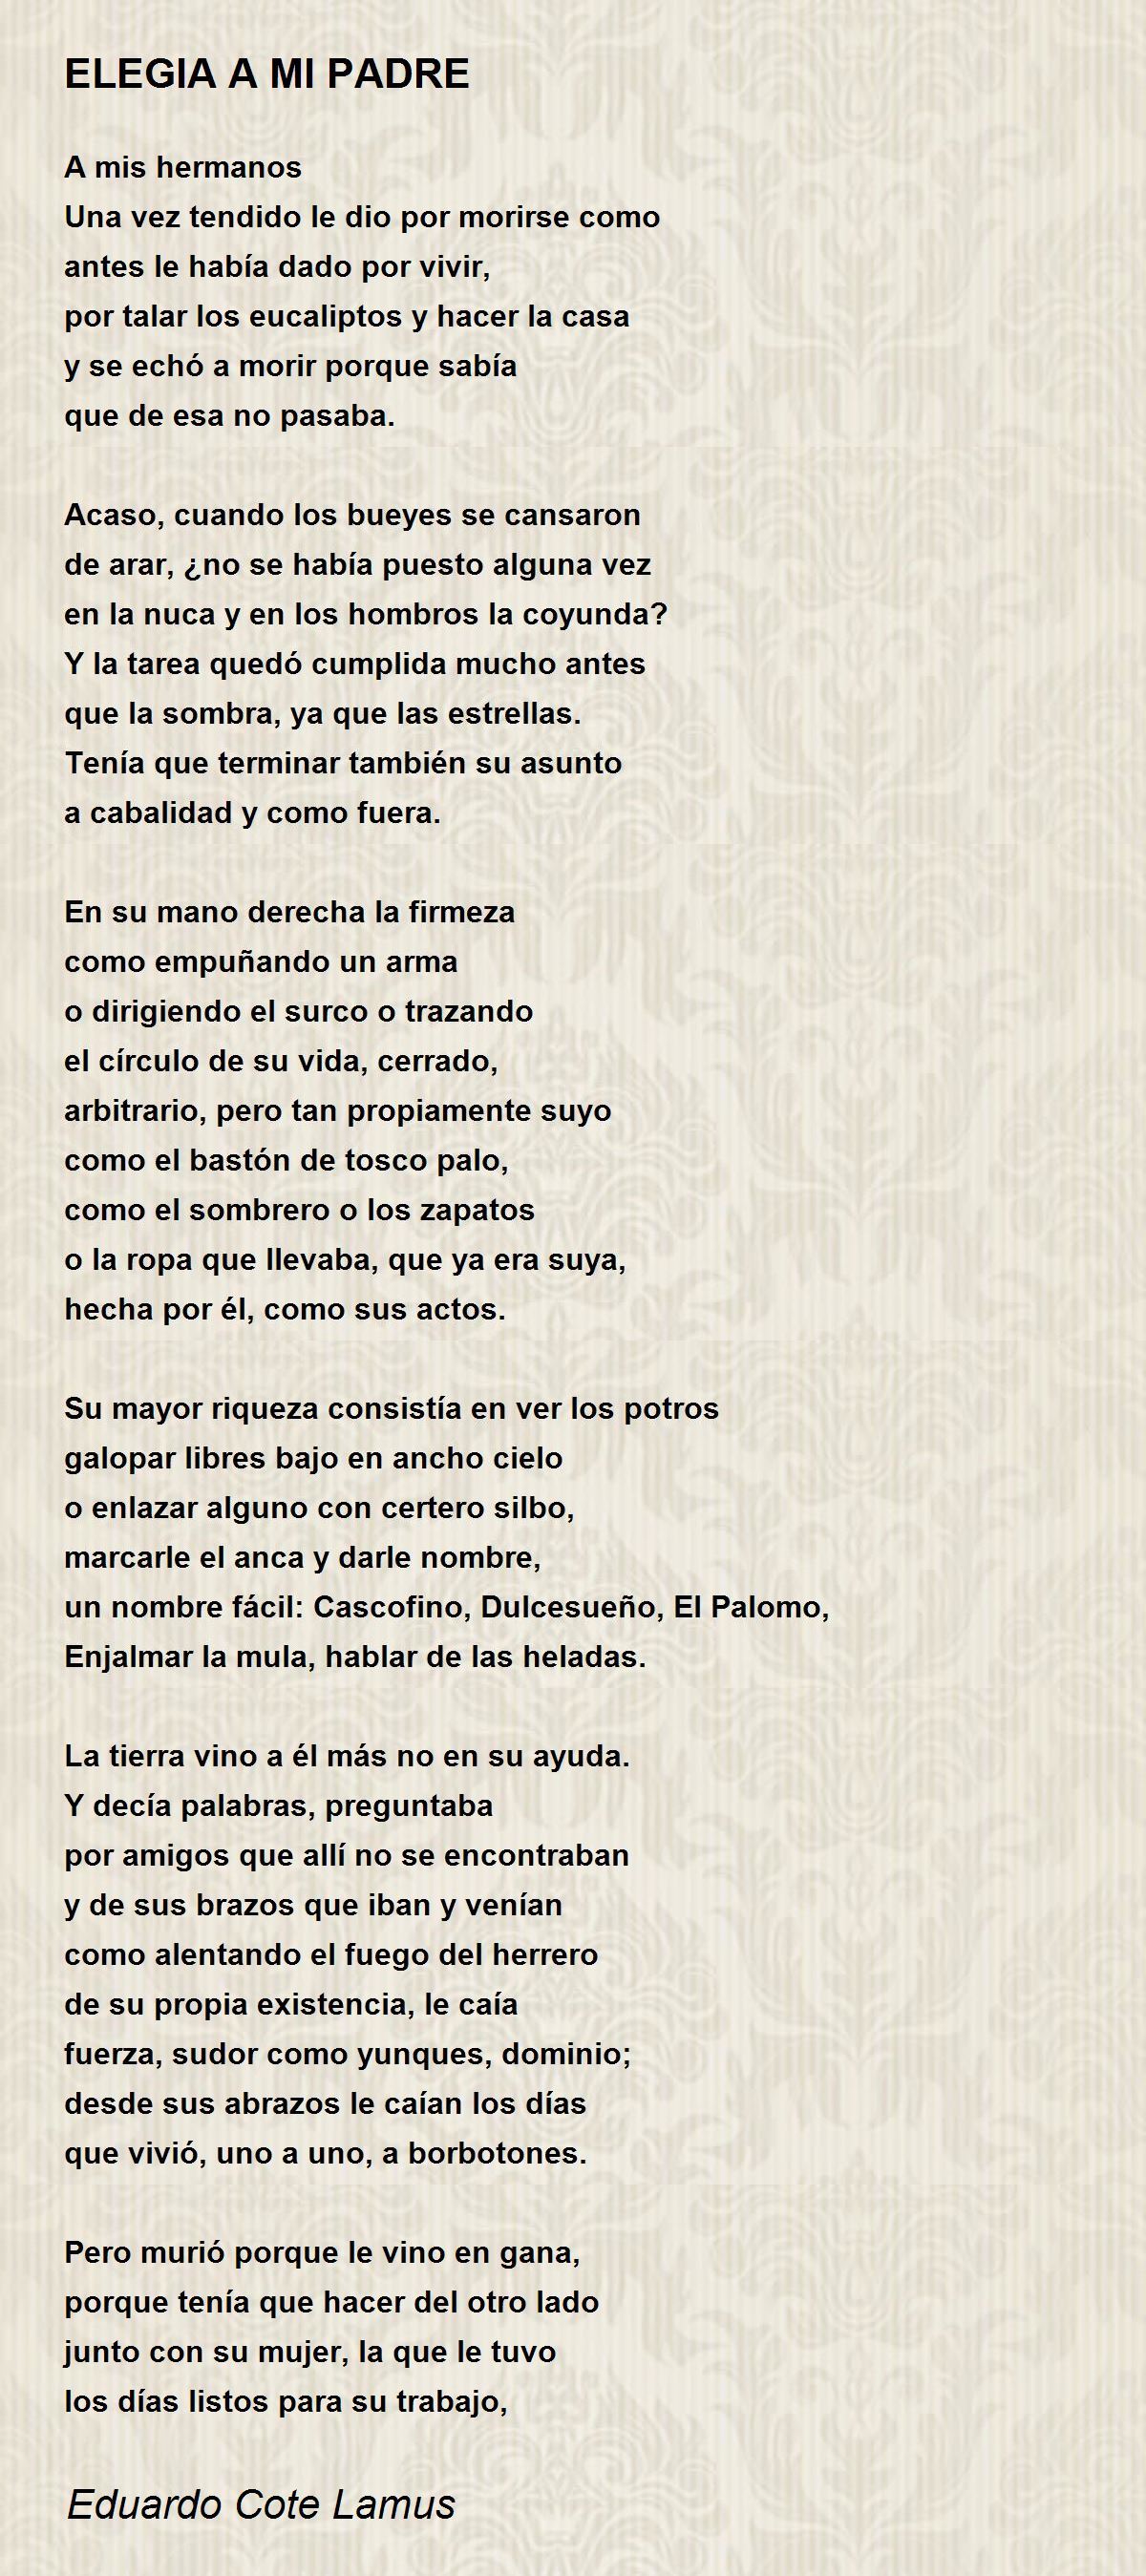 ELEGIA A MI PADRE - ELEGIA A MI PADRE Poem by Eduardo Cote Lamus